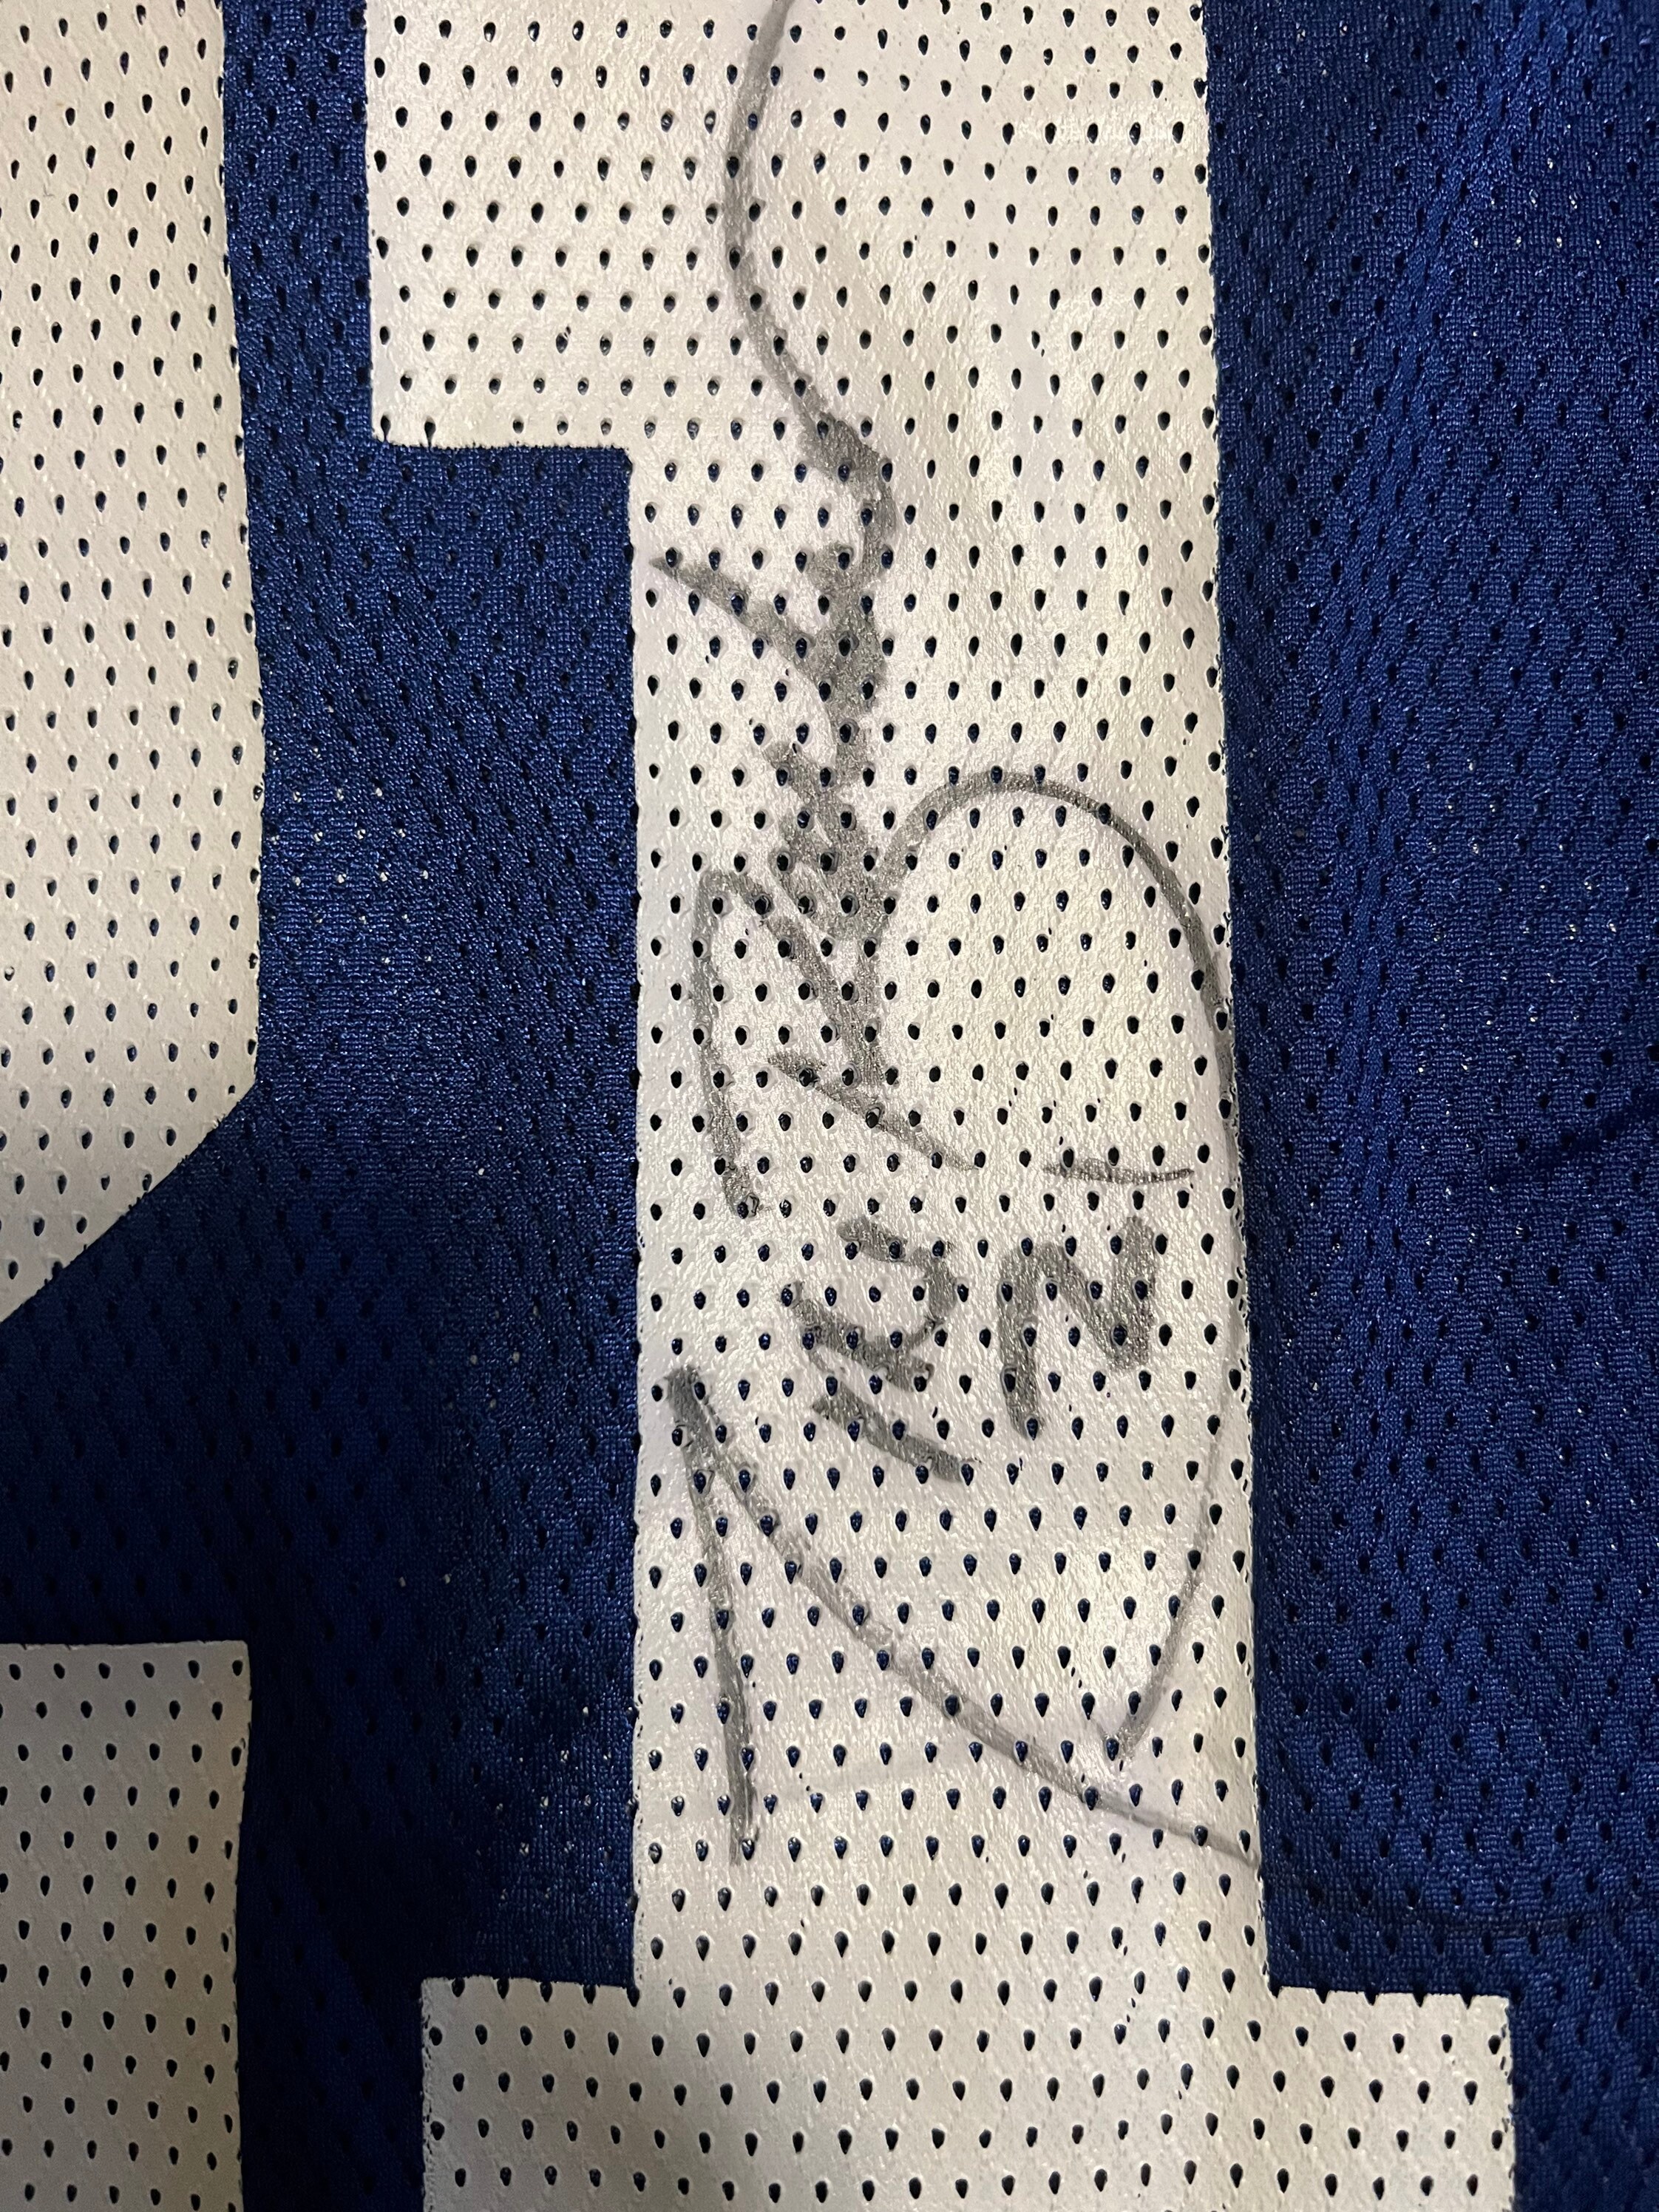 Tiki Barber Autographed Signed Framed New York Giants Jersey -   Israel